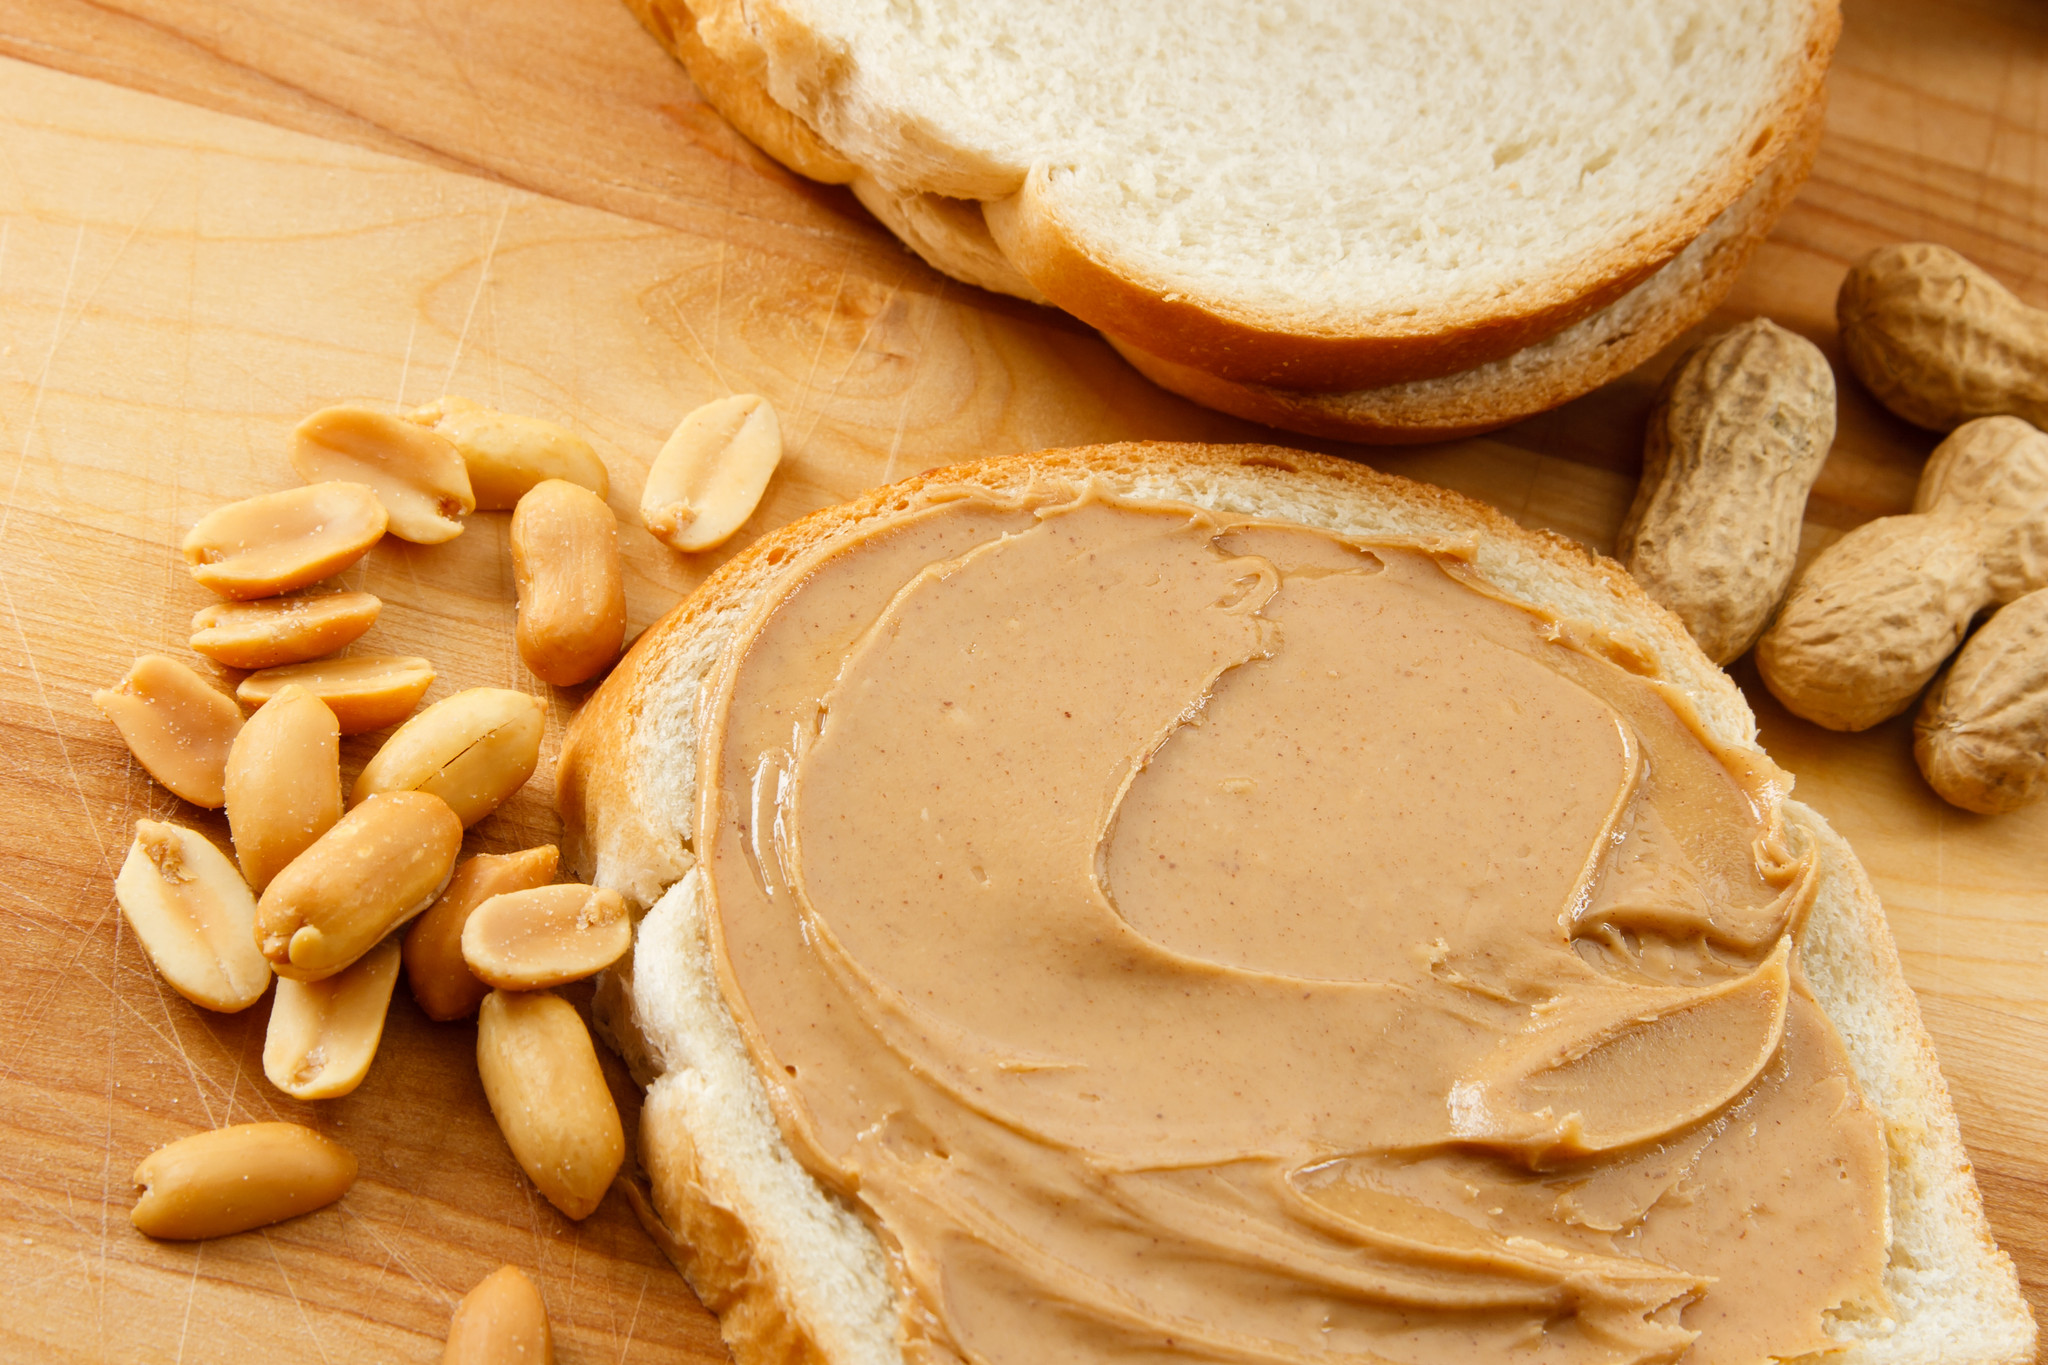 peanut-butter-on-bread-with-pe-13614866.jpg